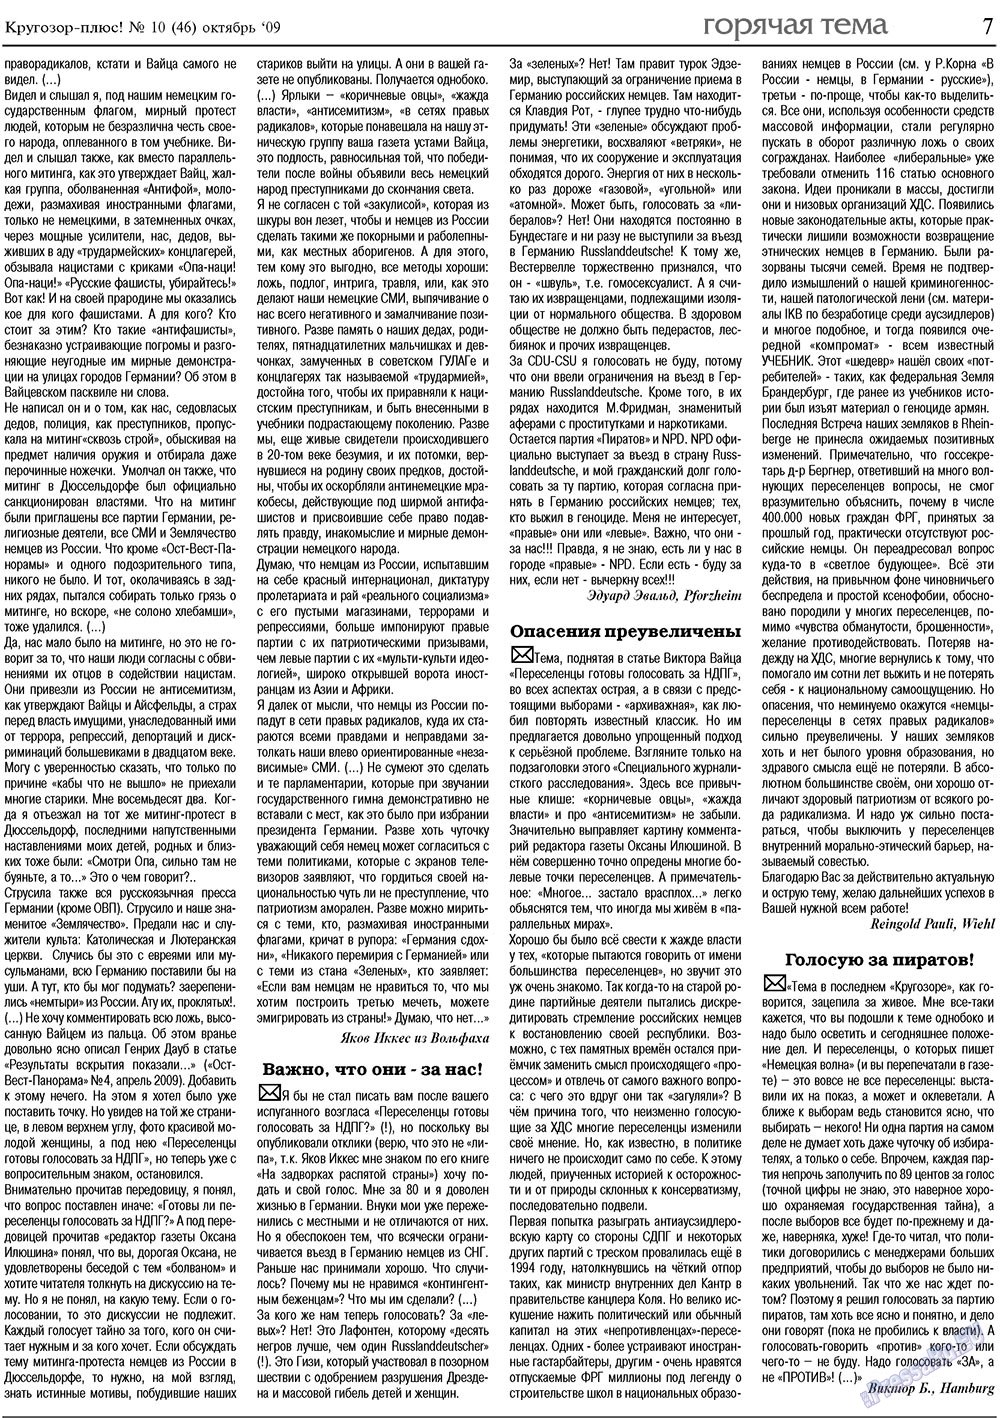 Кругозор плюс! (газета). 2009 год, номер 10, стр. 7